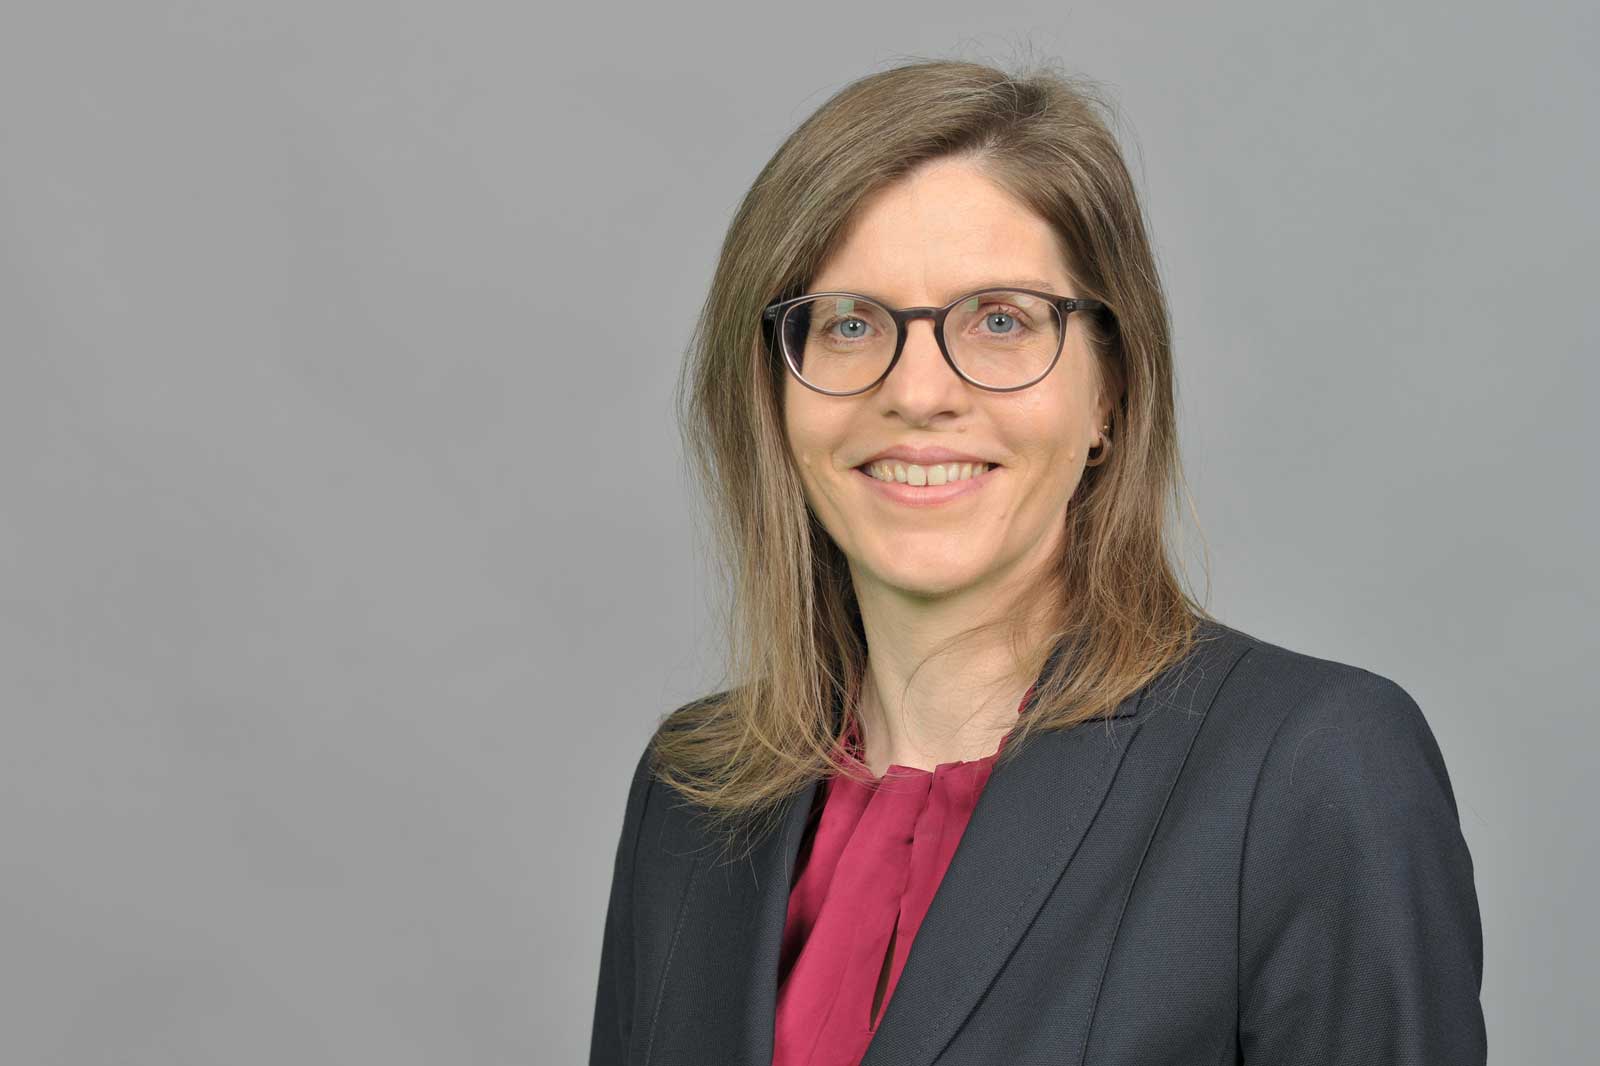 Daniela Müller | Senior Expert Civil Engineering @ RWE Technology GmbH